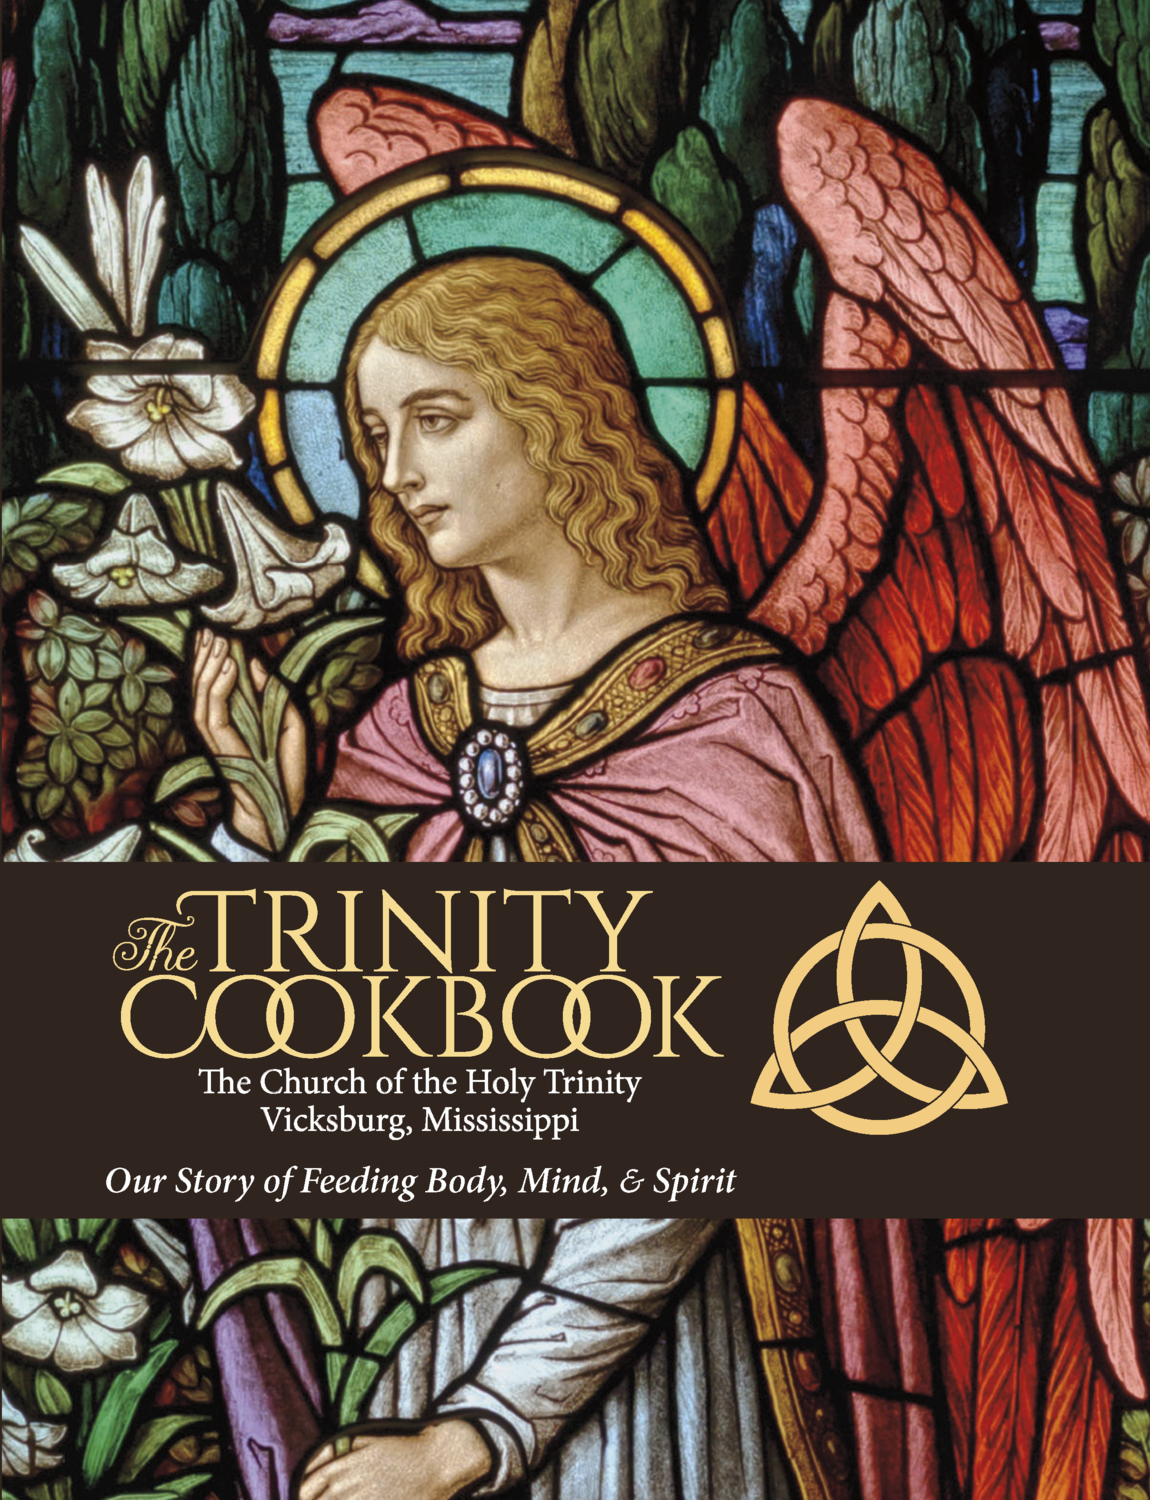 The Trinity Cookbook